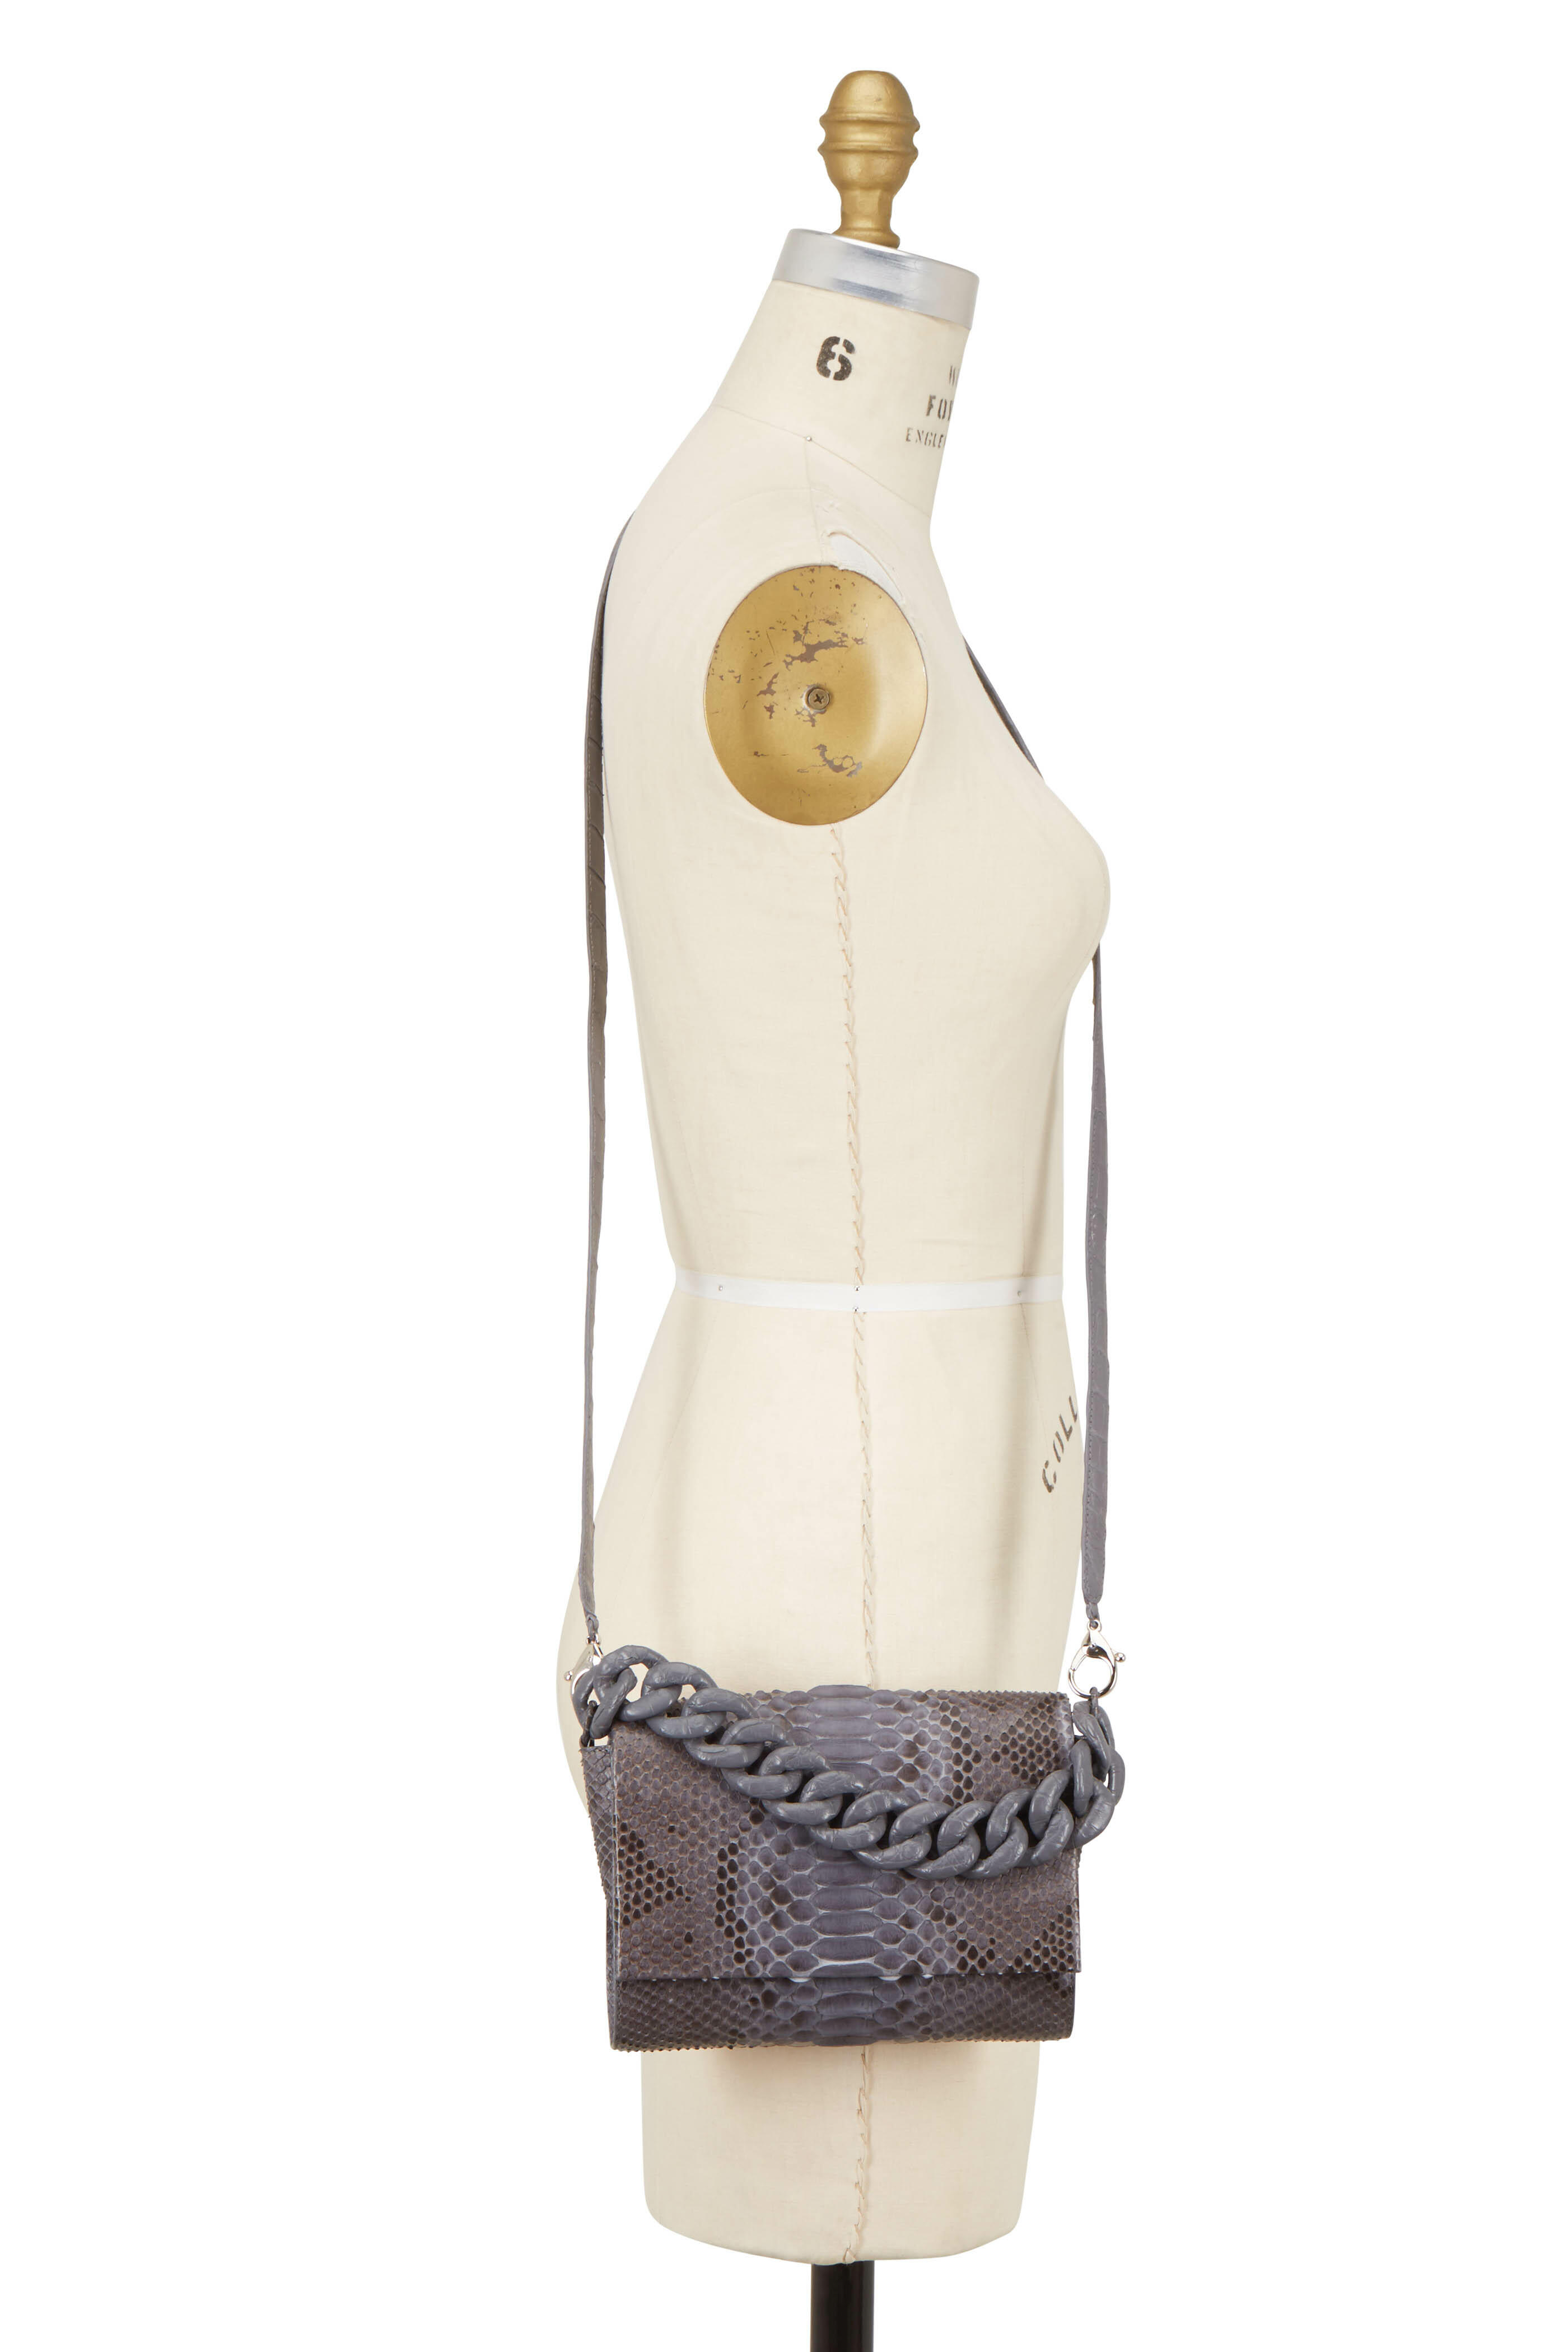 Nancy Gonzalez Crocodile Top Handle Flap Bag Gray Chain Strap Small Shoulder Bag